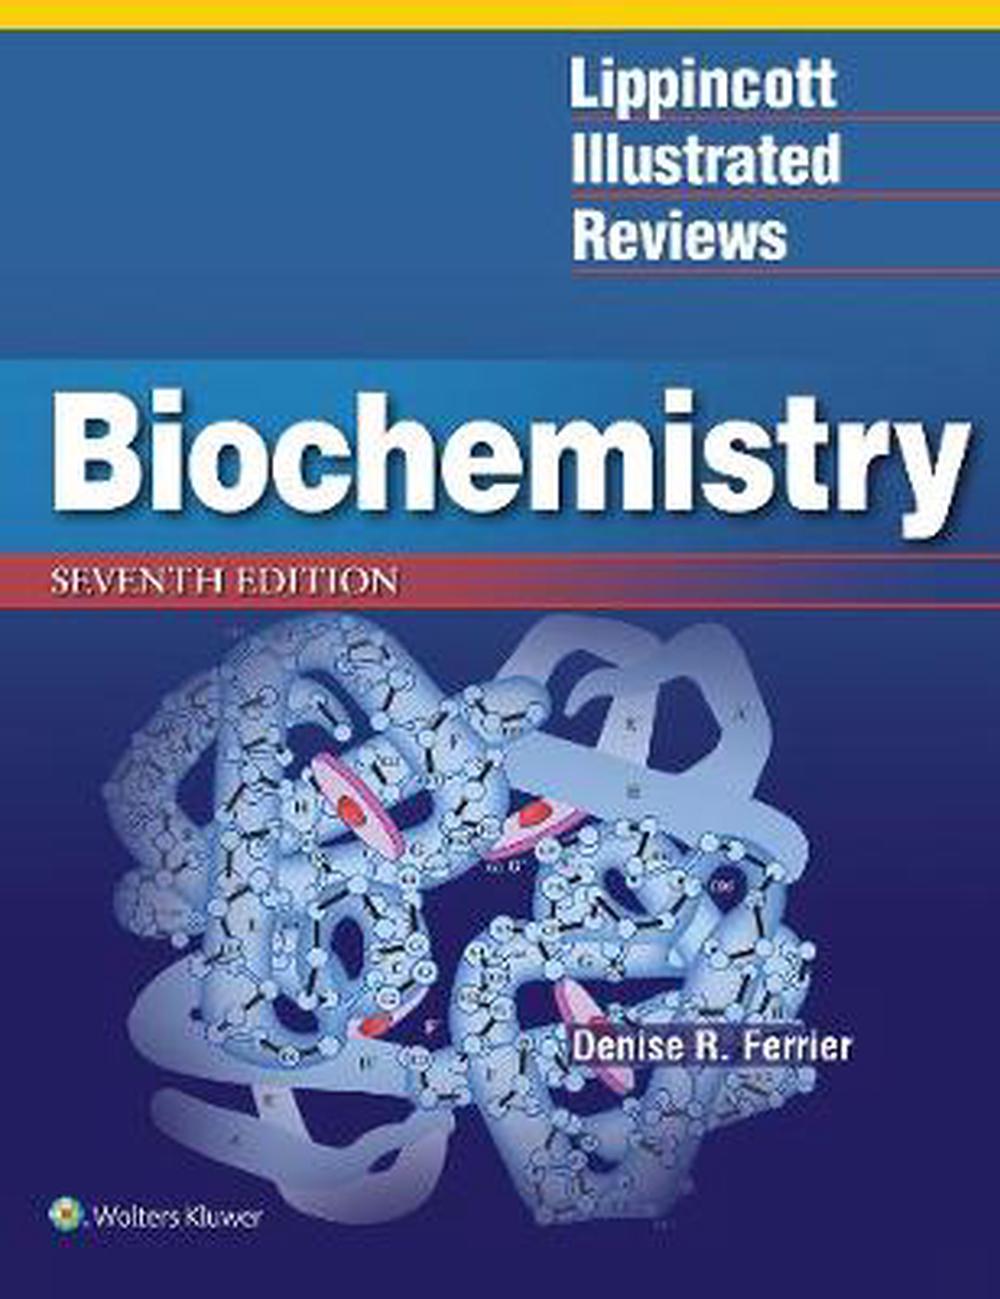 lippincott illustrated reviews biochemistry 7th edition pdf download